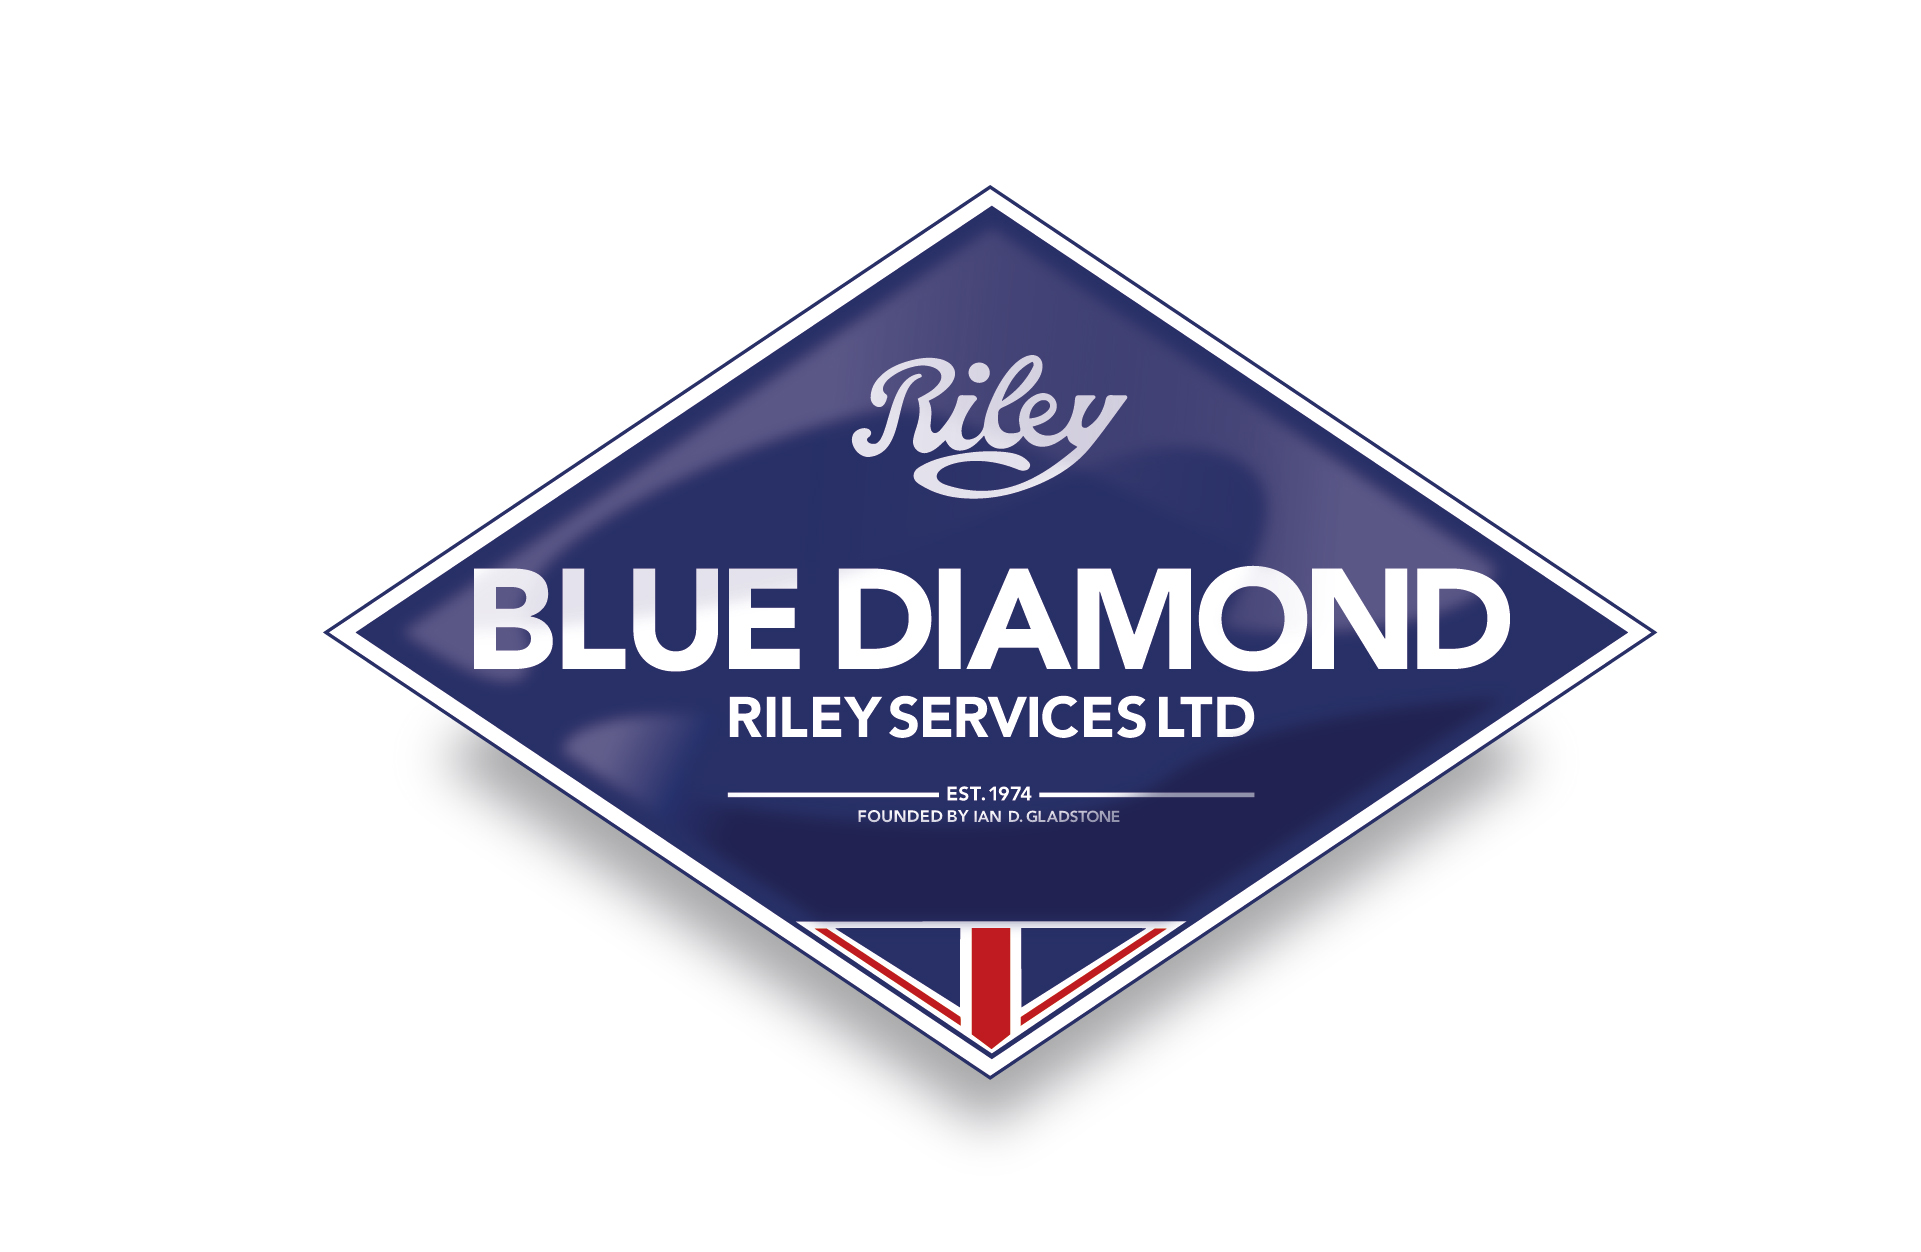 Blue Diamond Riley Services Ltd image